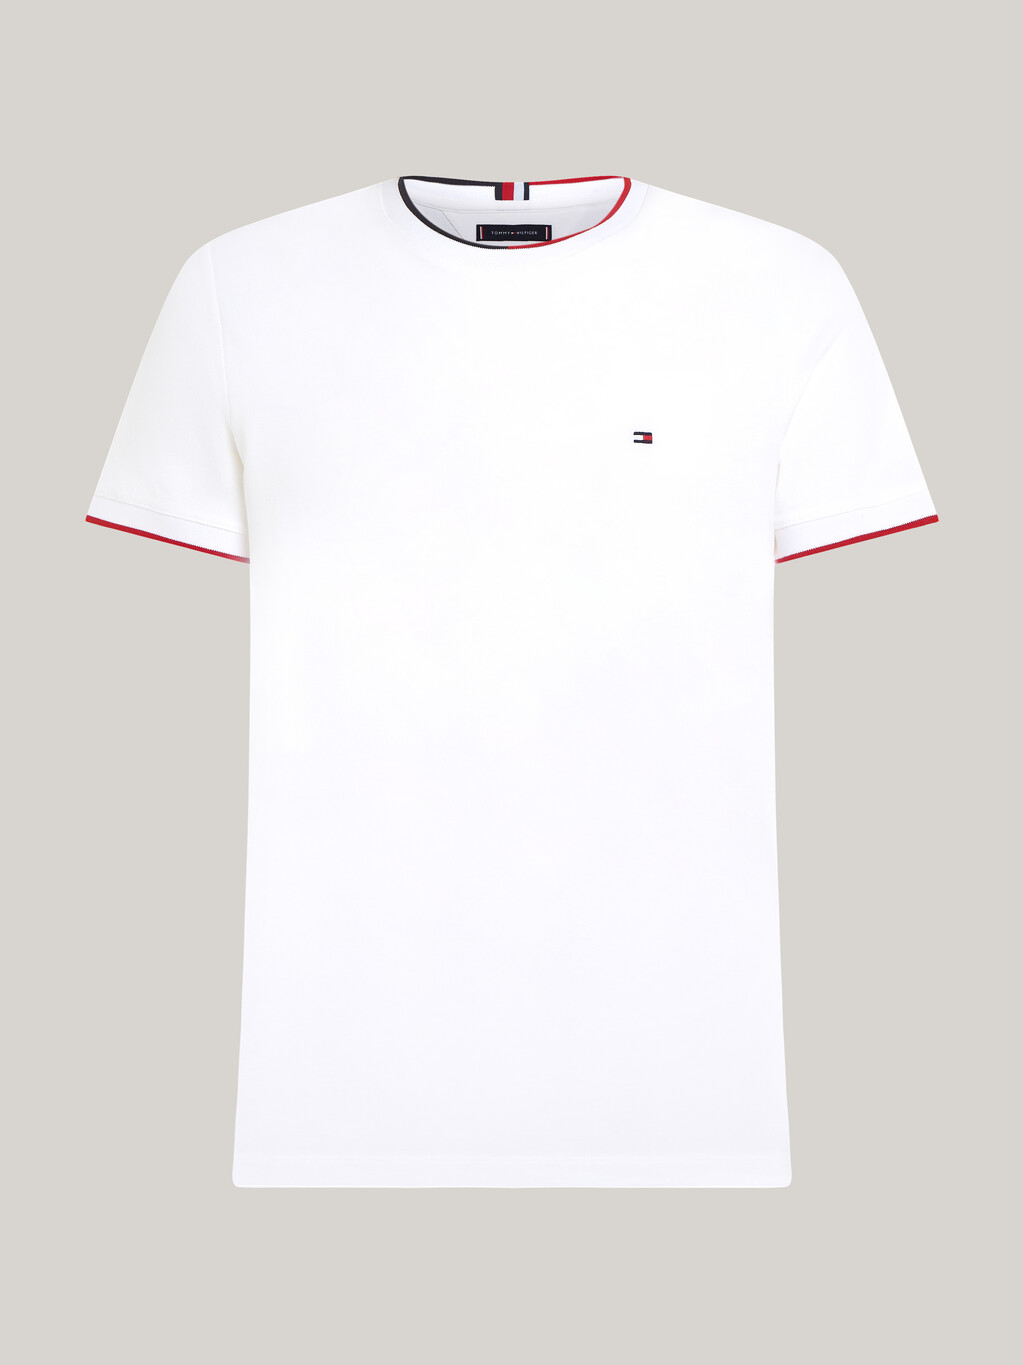 Tipped Pique Slim Fit T-Shirt, White, hi-res